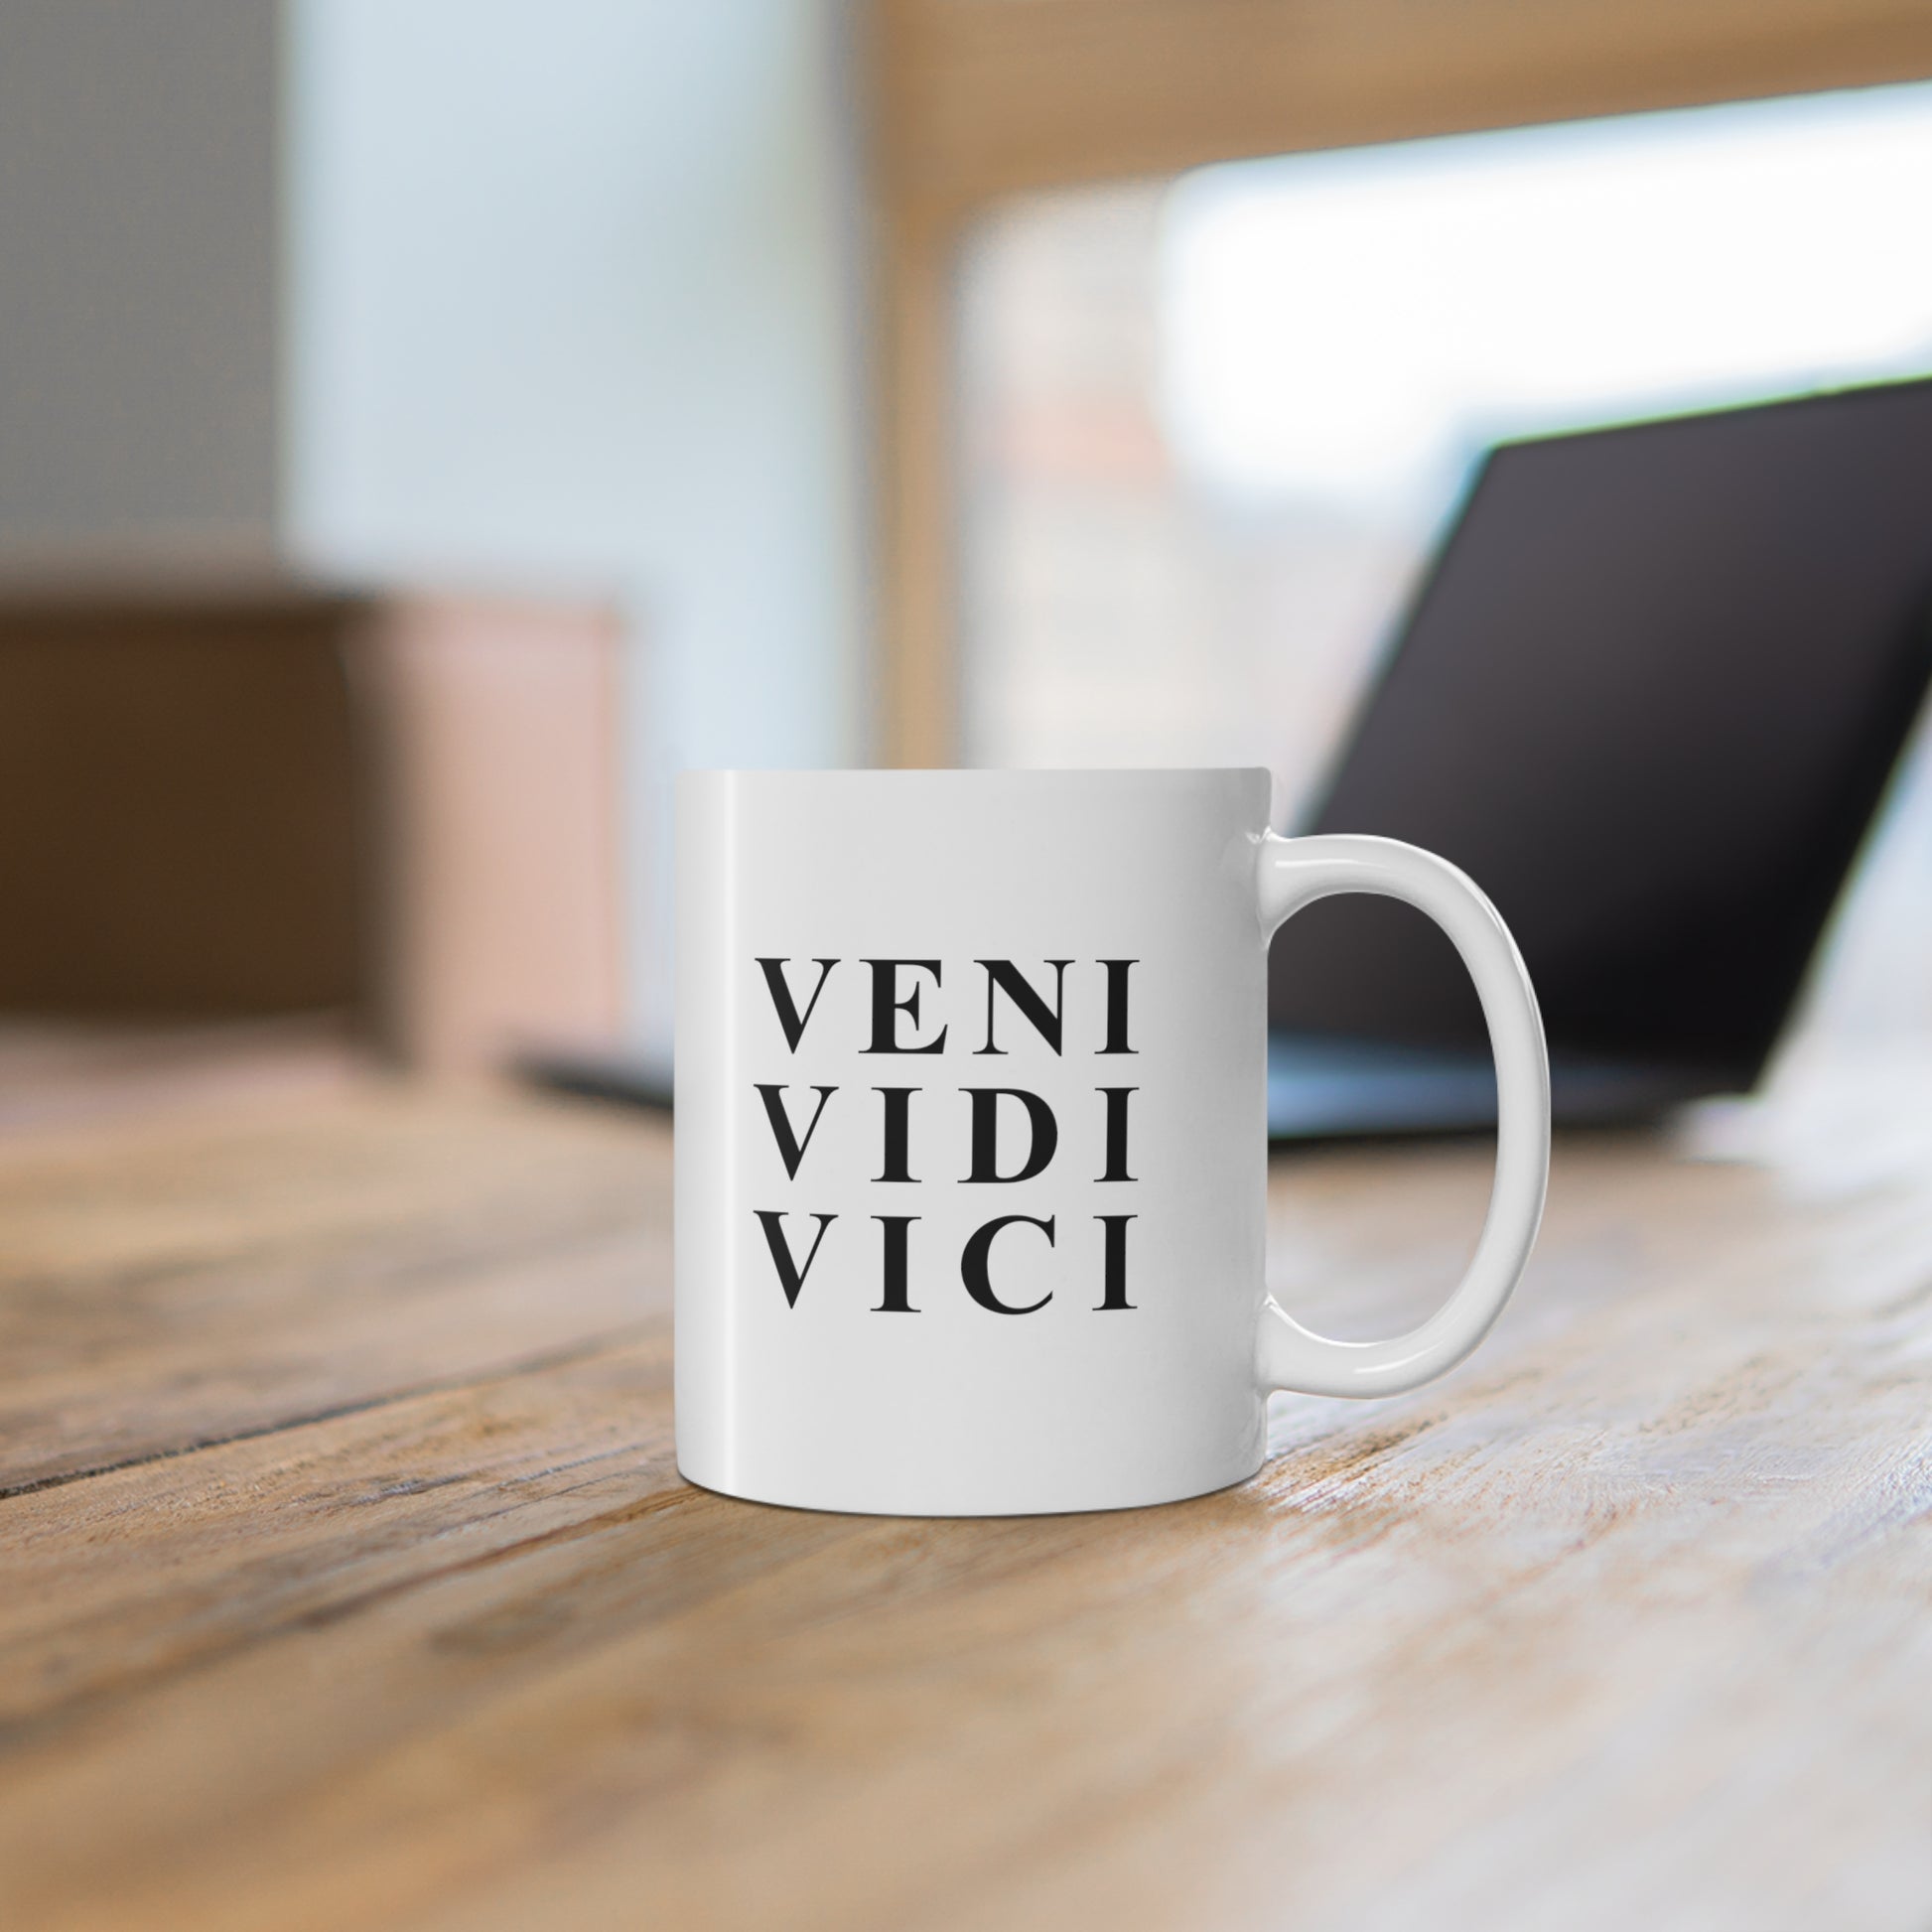 11oz ceramic mug with quote Veni Vidi Vici